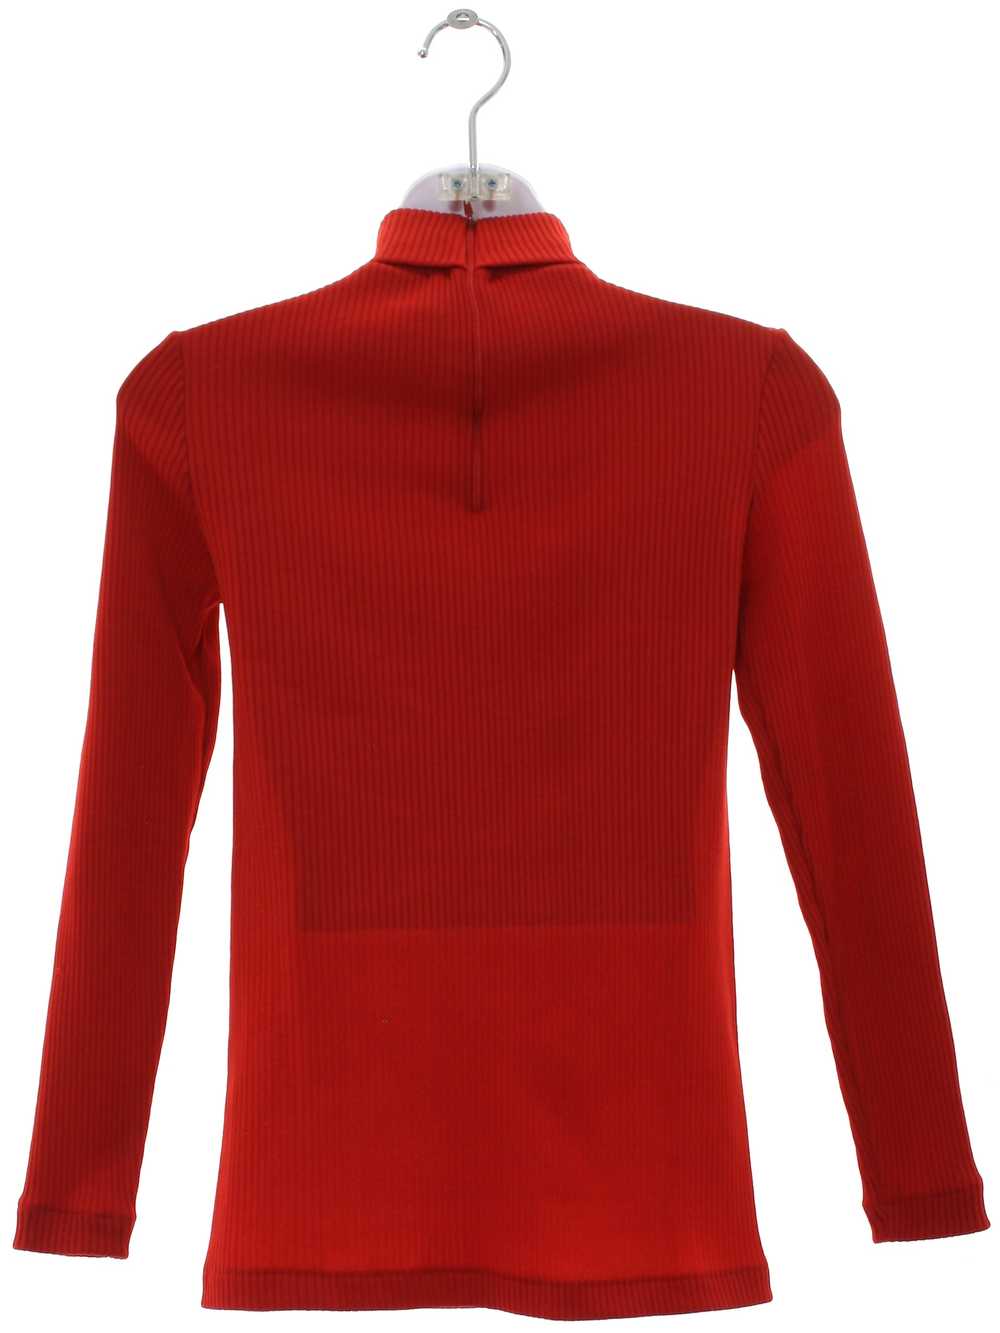 1970's Womens/Girls Mod Knit Shirt - image 3